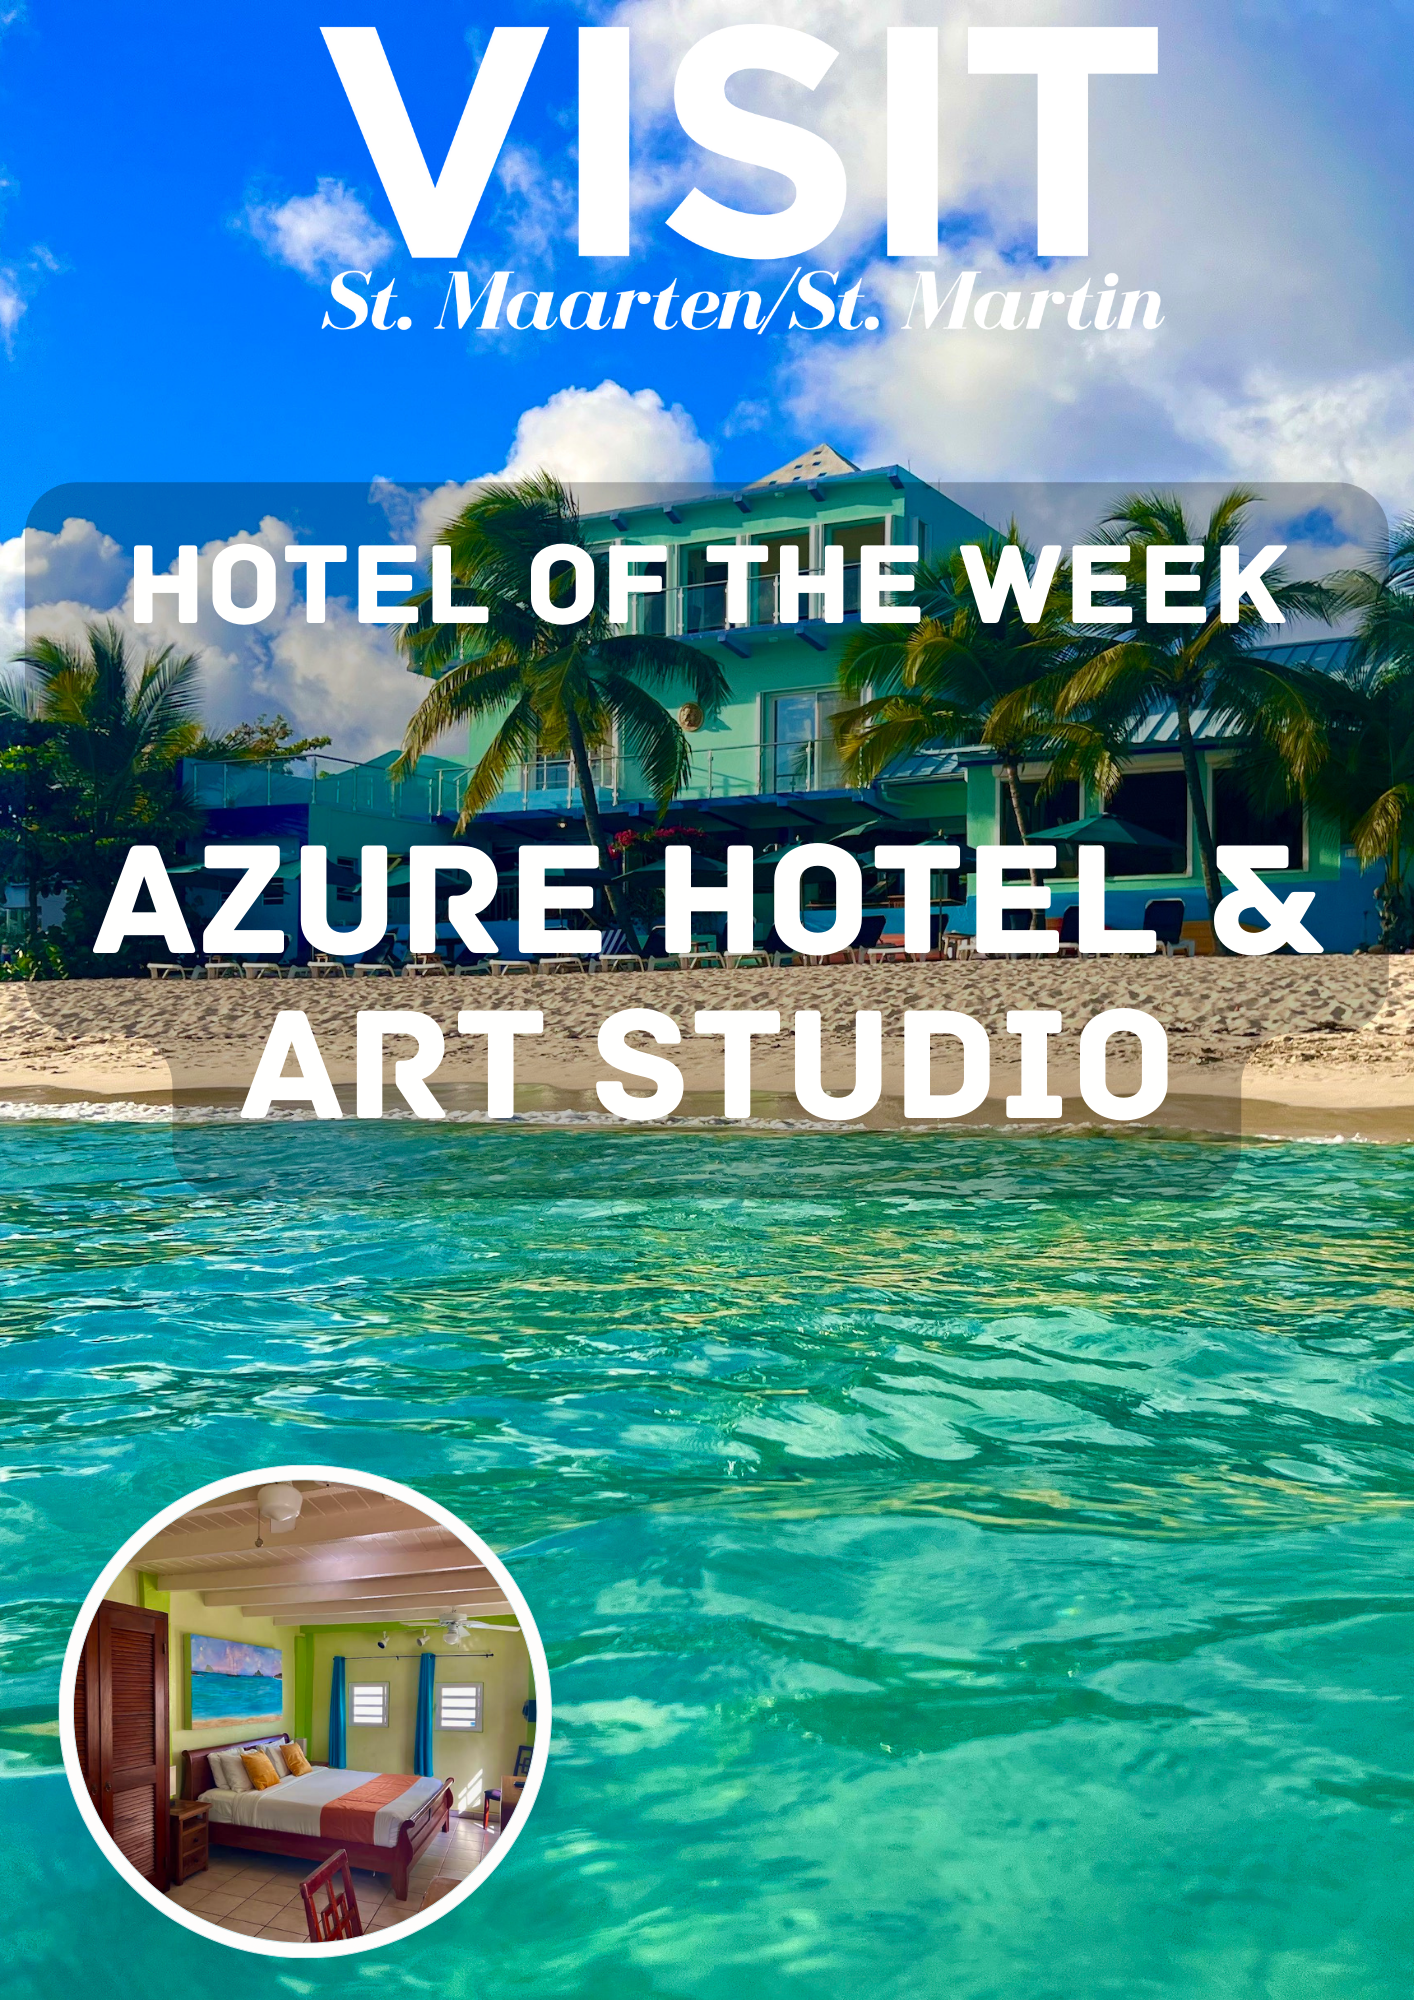 Azure Hotel & Art Studio, Hotel of the week, St Maarten, Simpson Bay, Philipsburg, St Martin